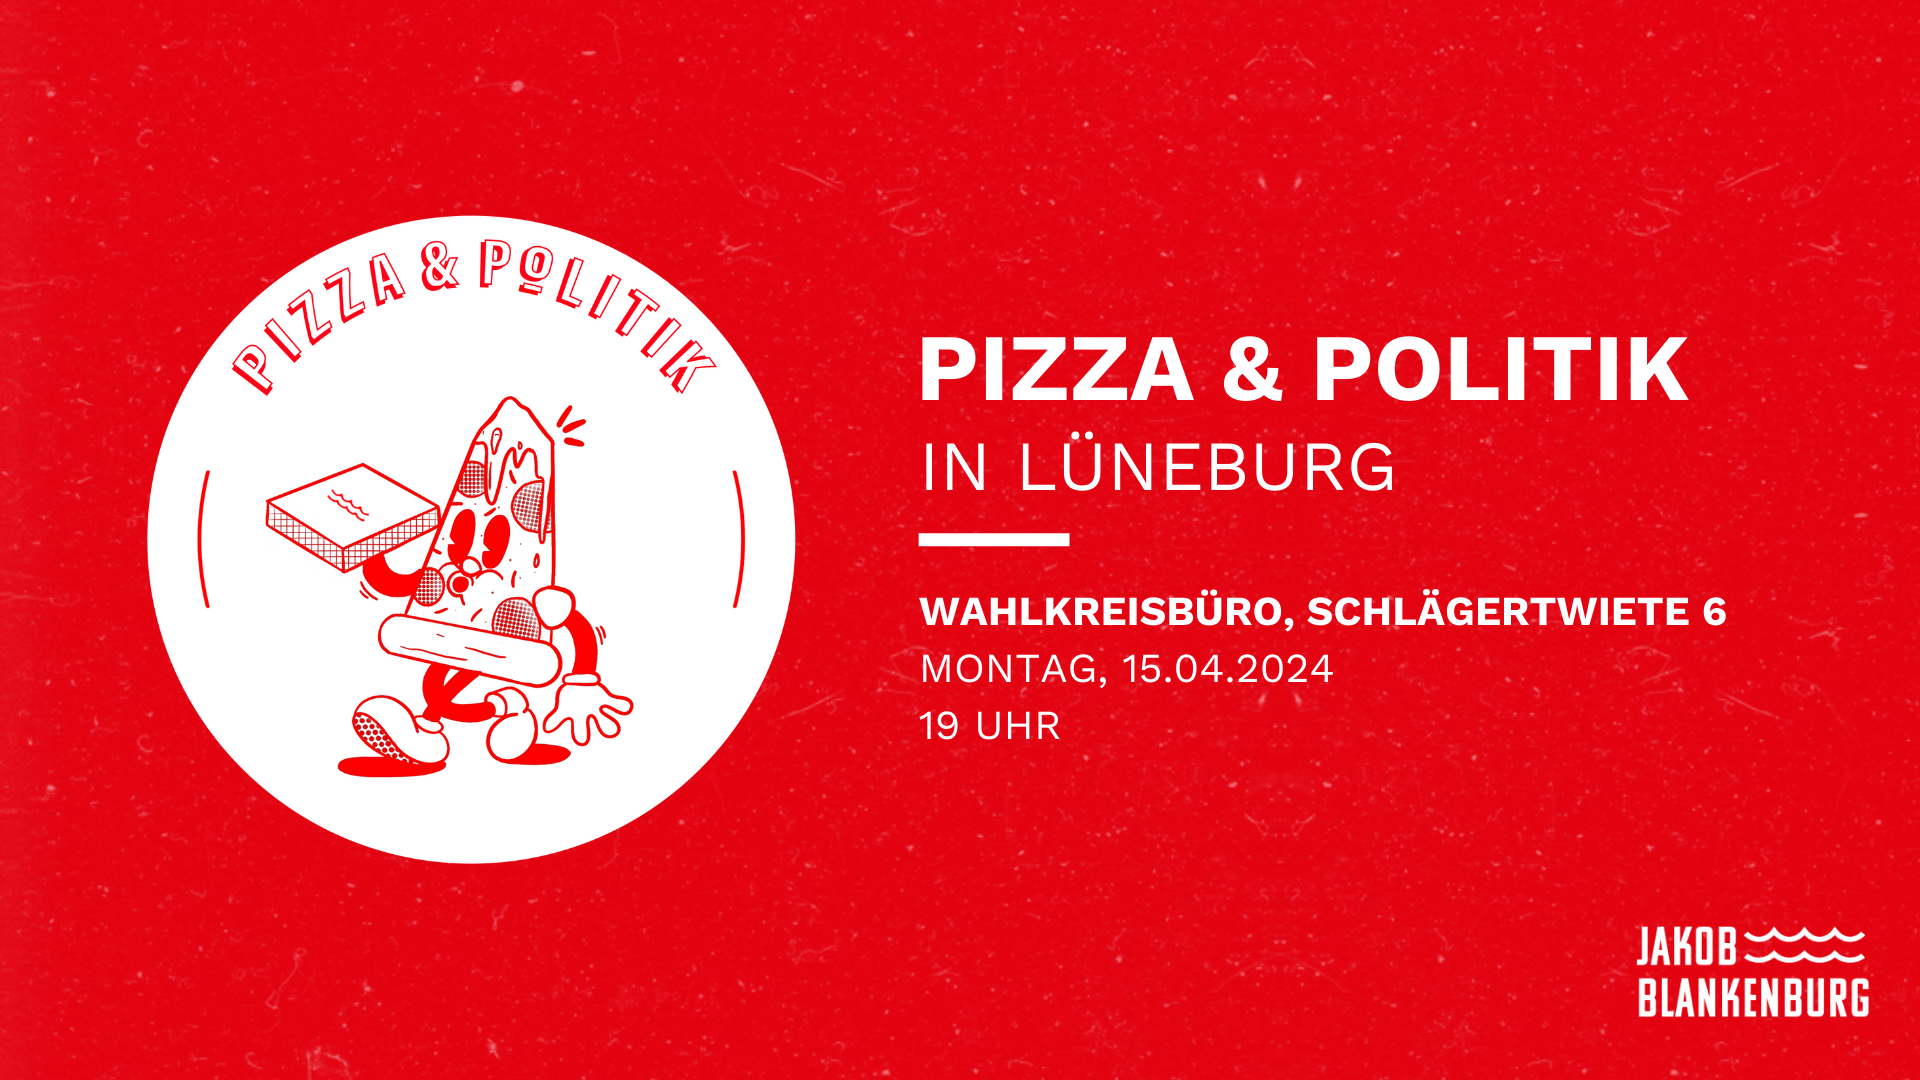 pizza-politik-lüneburg-blankenburg-2024